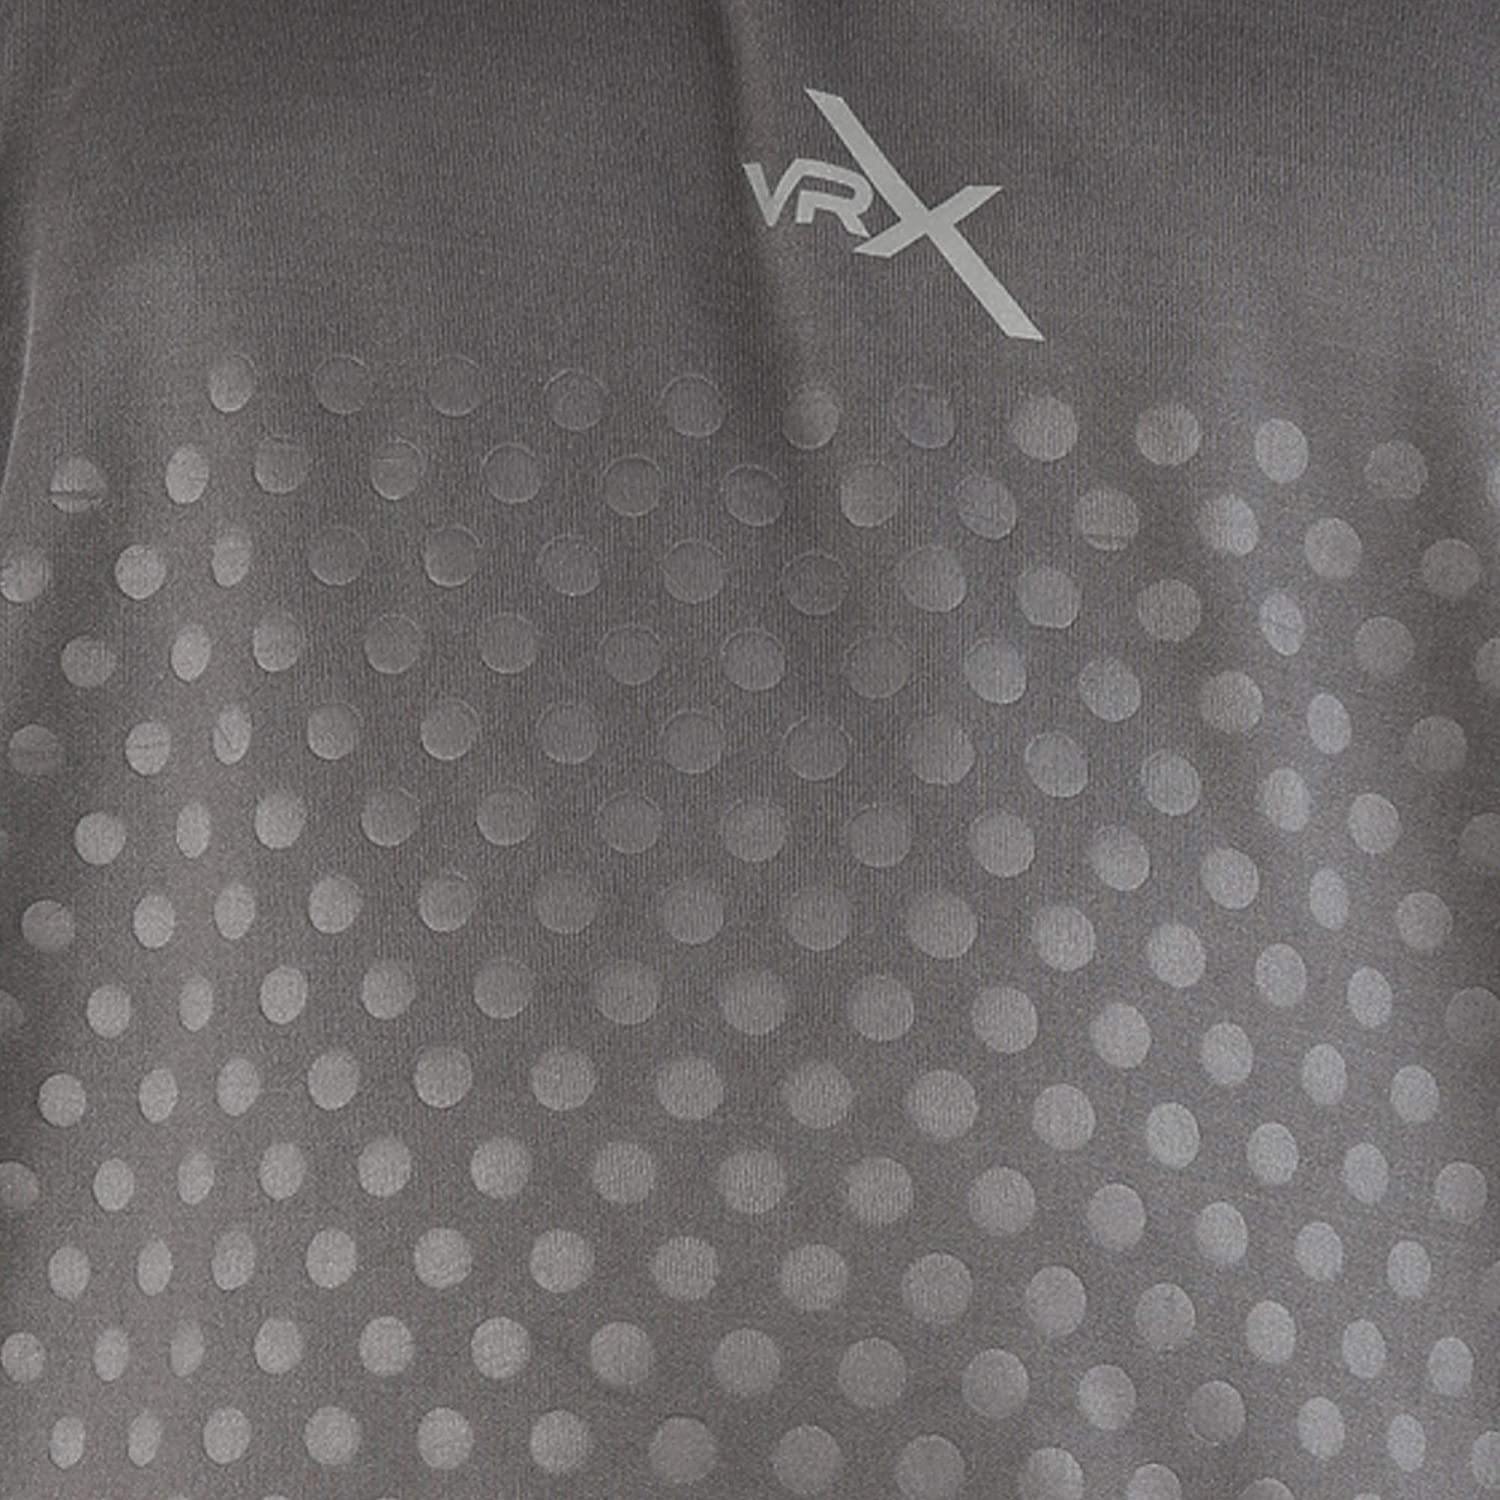 Vector X Polyester Kids T-shirt Grey - Best Price online Prokicksports.com